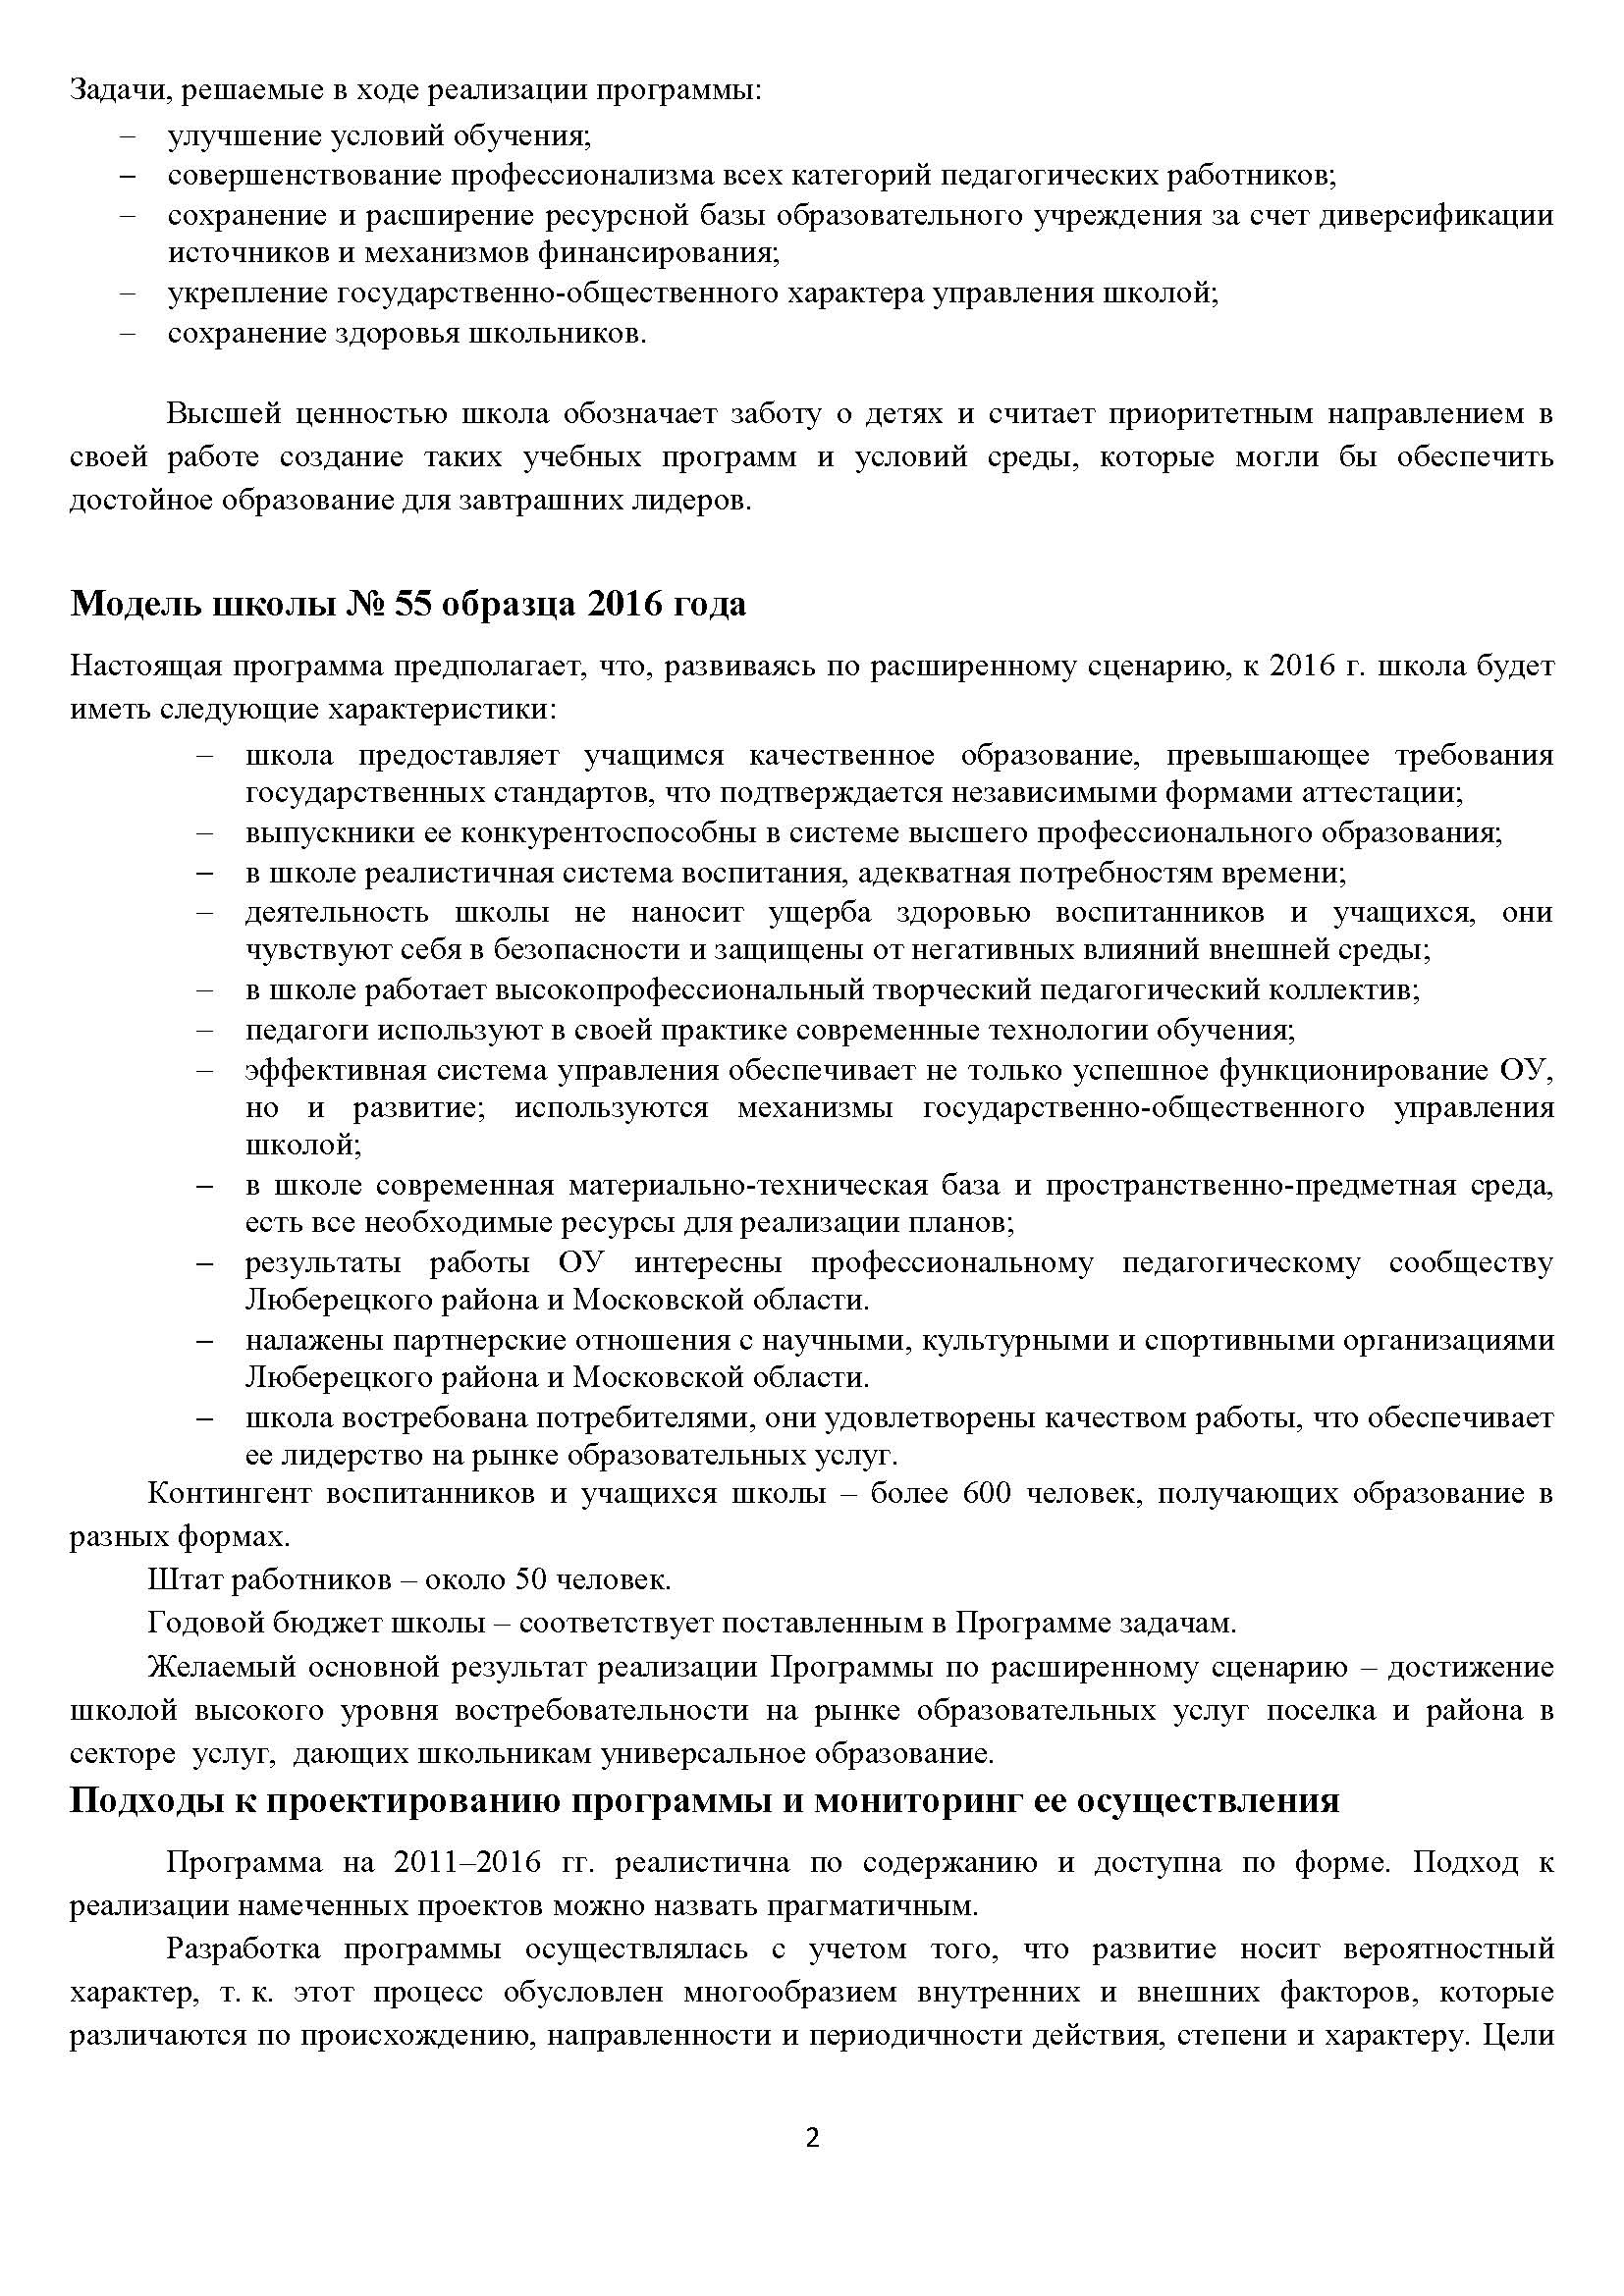 Программа развития школы 2011-2016 гг. Стр.2